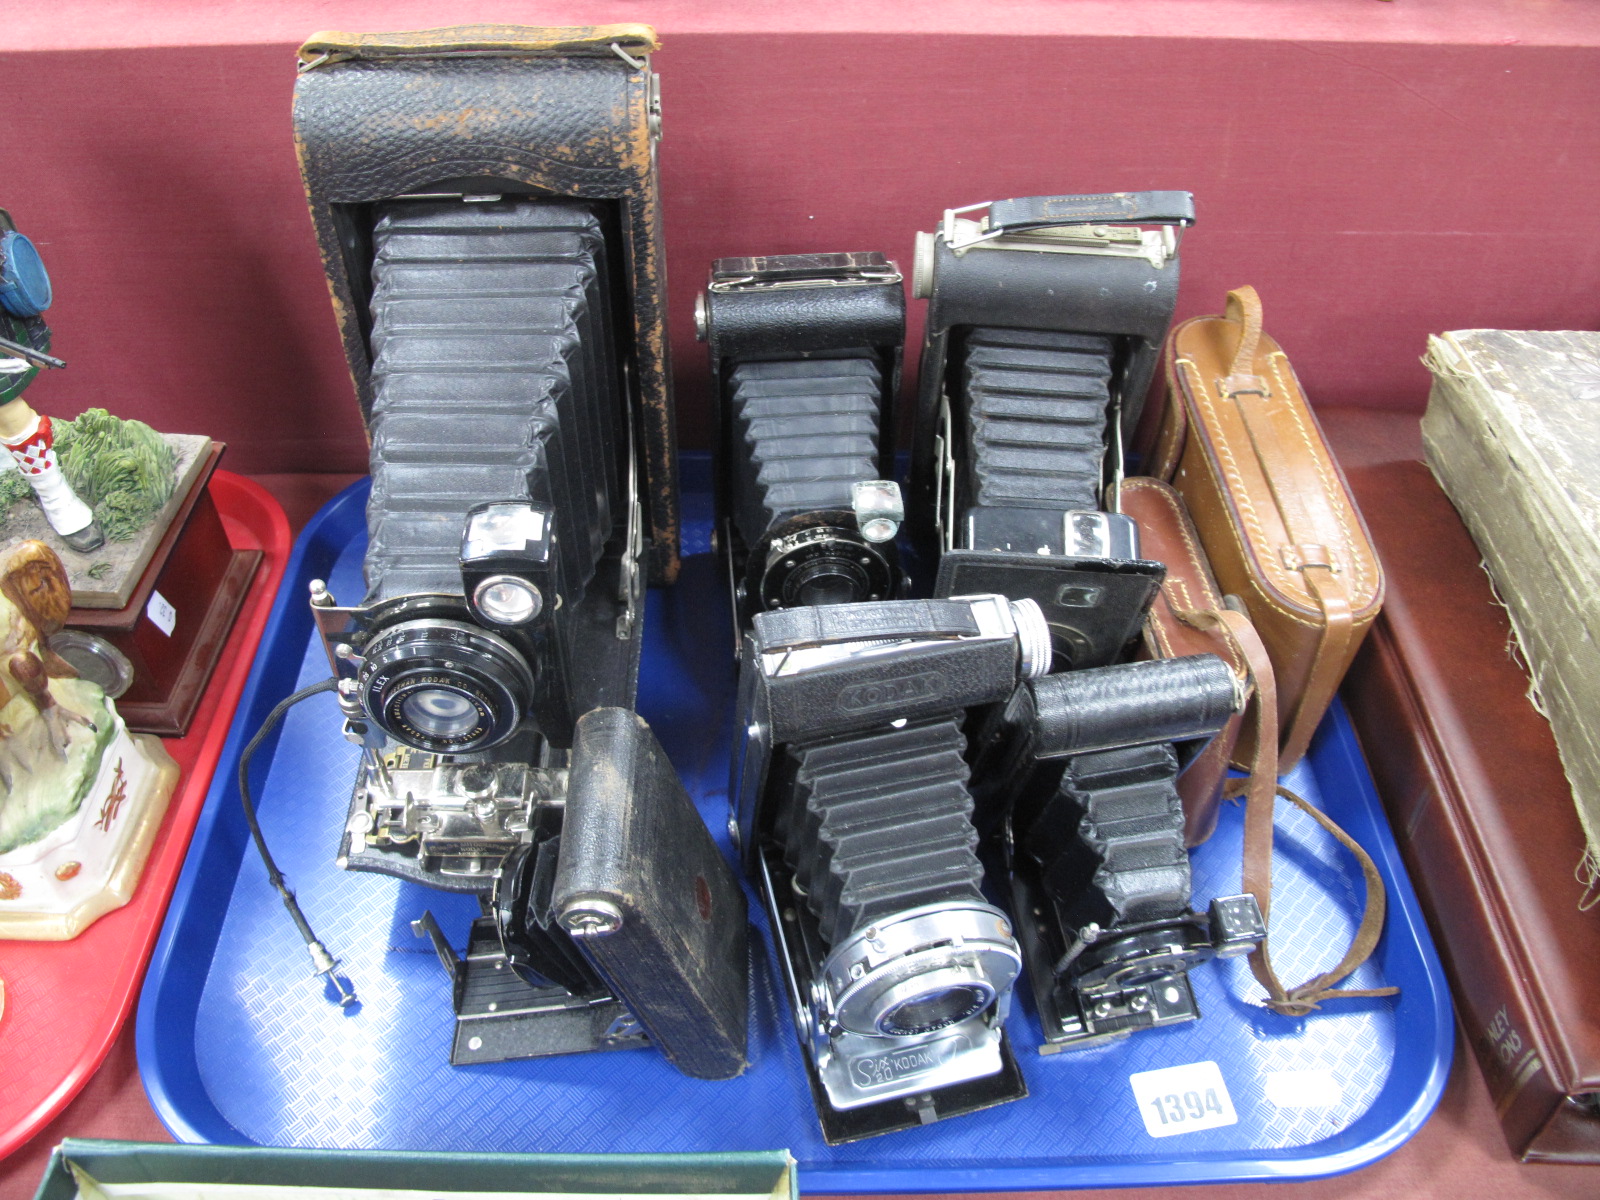 Kodak Autographic Model C, with folding lens, Vest picket hawk eye camera, other camera's:- One